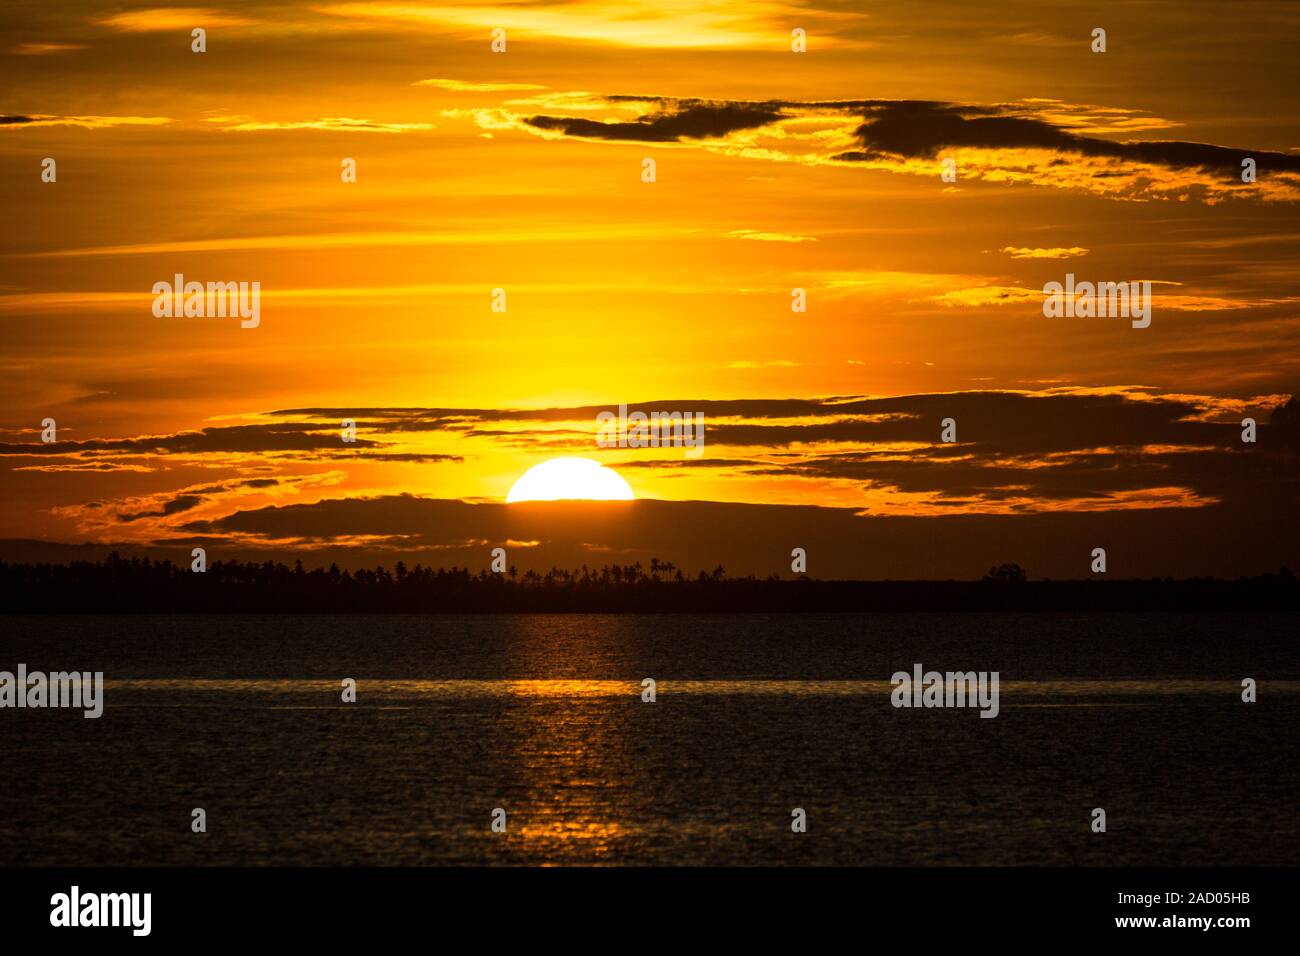 Spectacular golden sunset sky with illuminated clouds, coast of Zanzibar Stock Photo